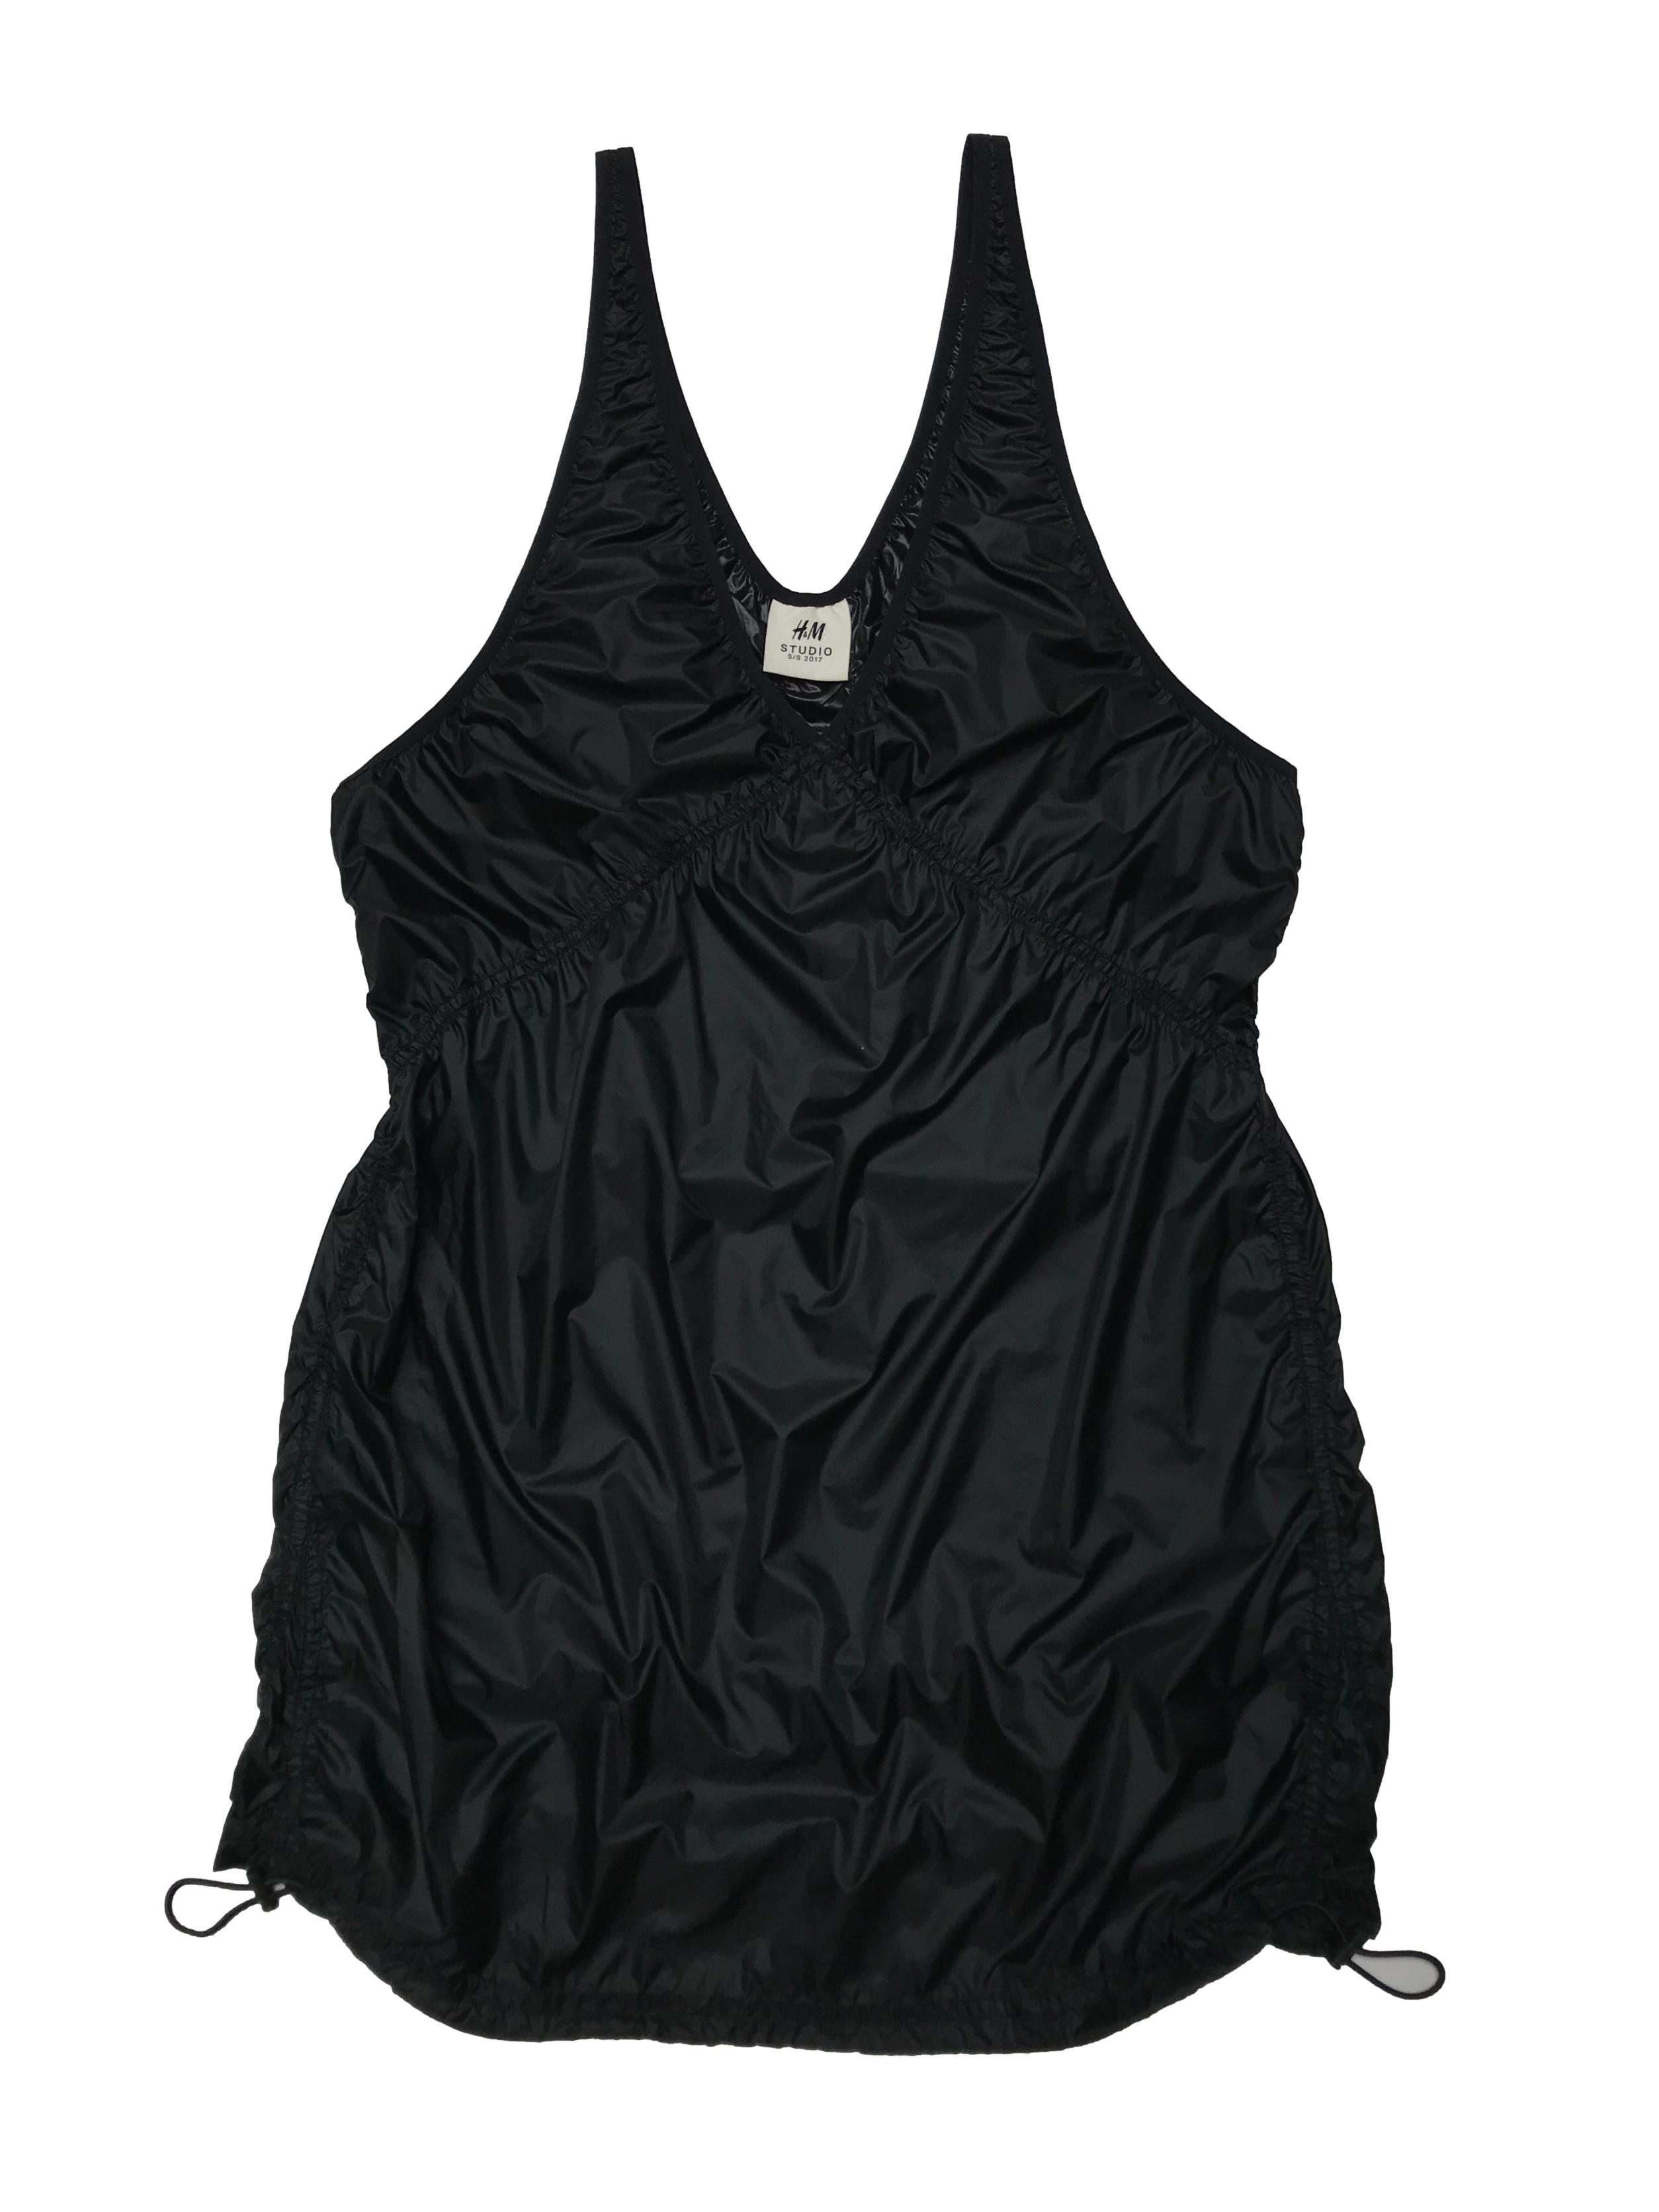 Vestido H&M Studio, tela negra delgada tipo impermeable, basta con reguladores. Busto 98cm Largo 85cm